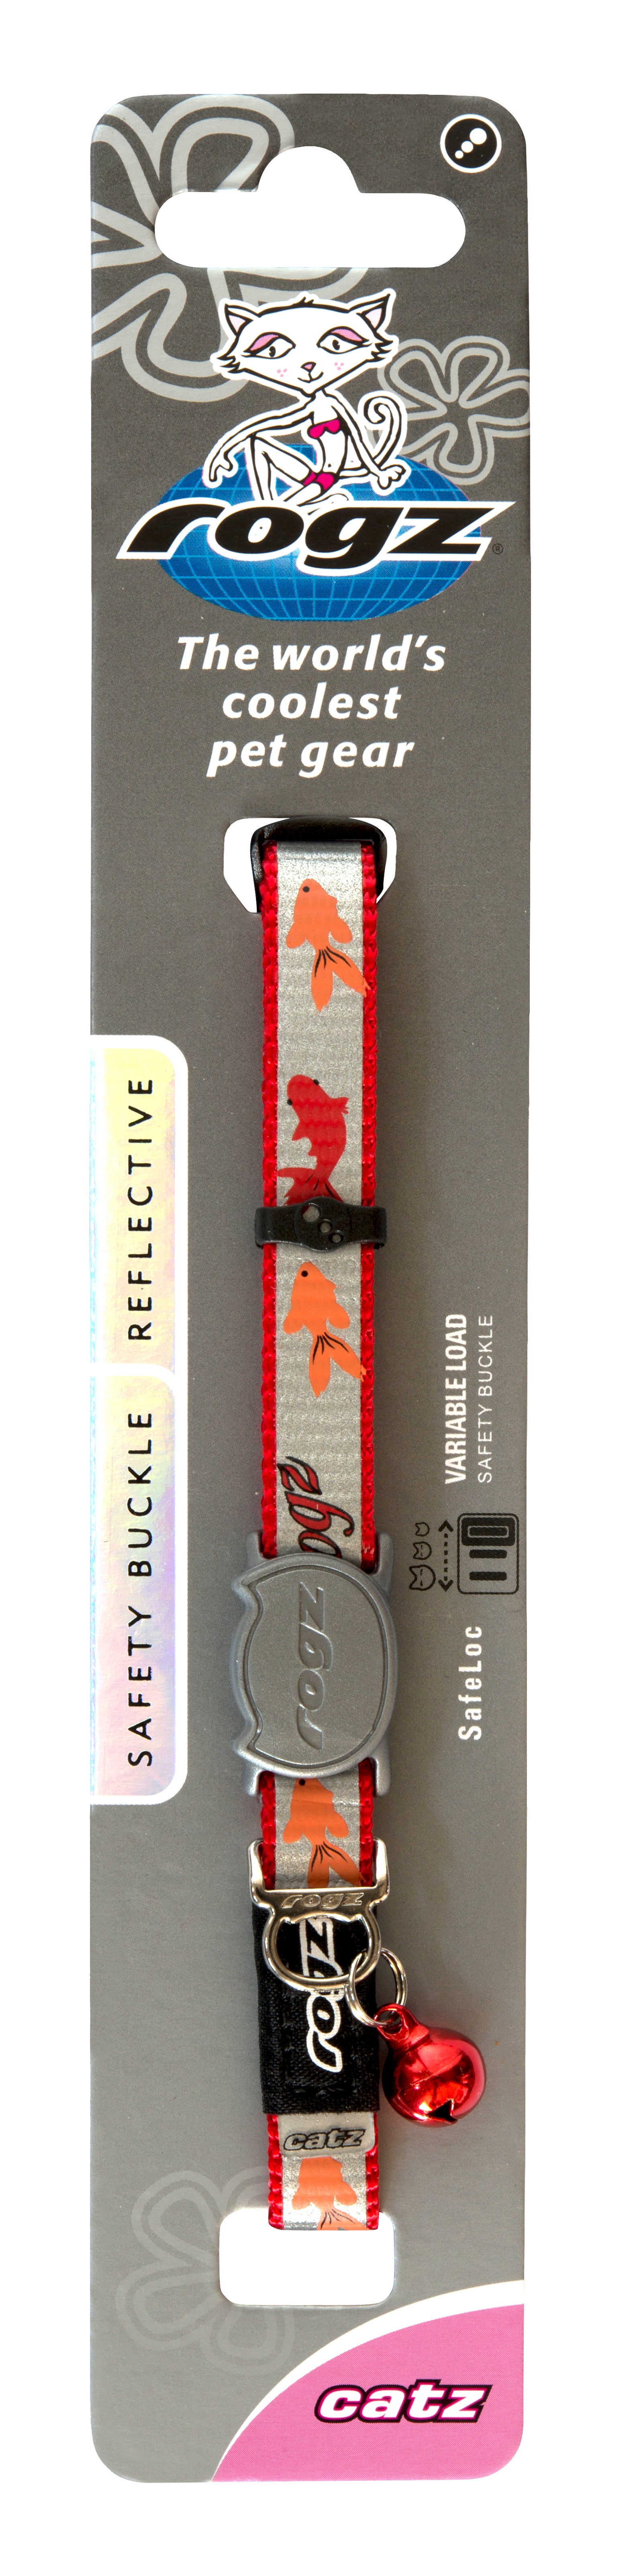 Rogz Safeloc Reflectocat Collar Red Fish - RSPCA VIC